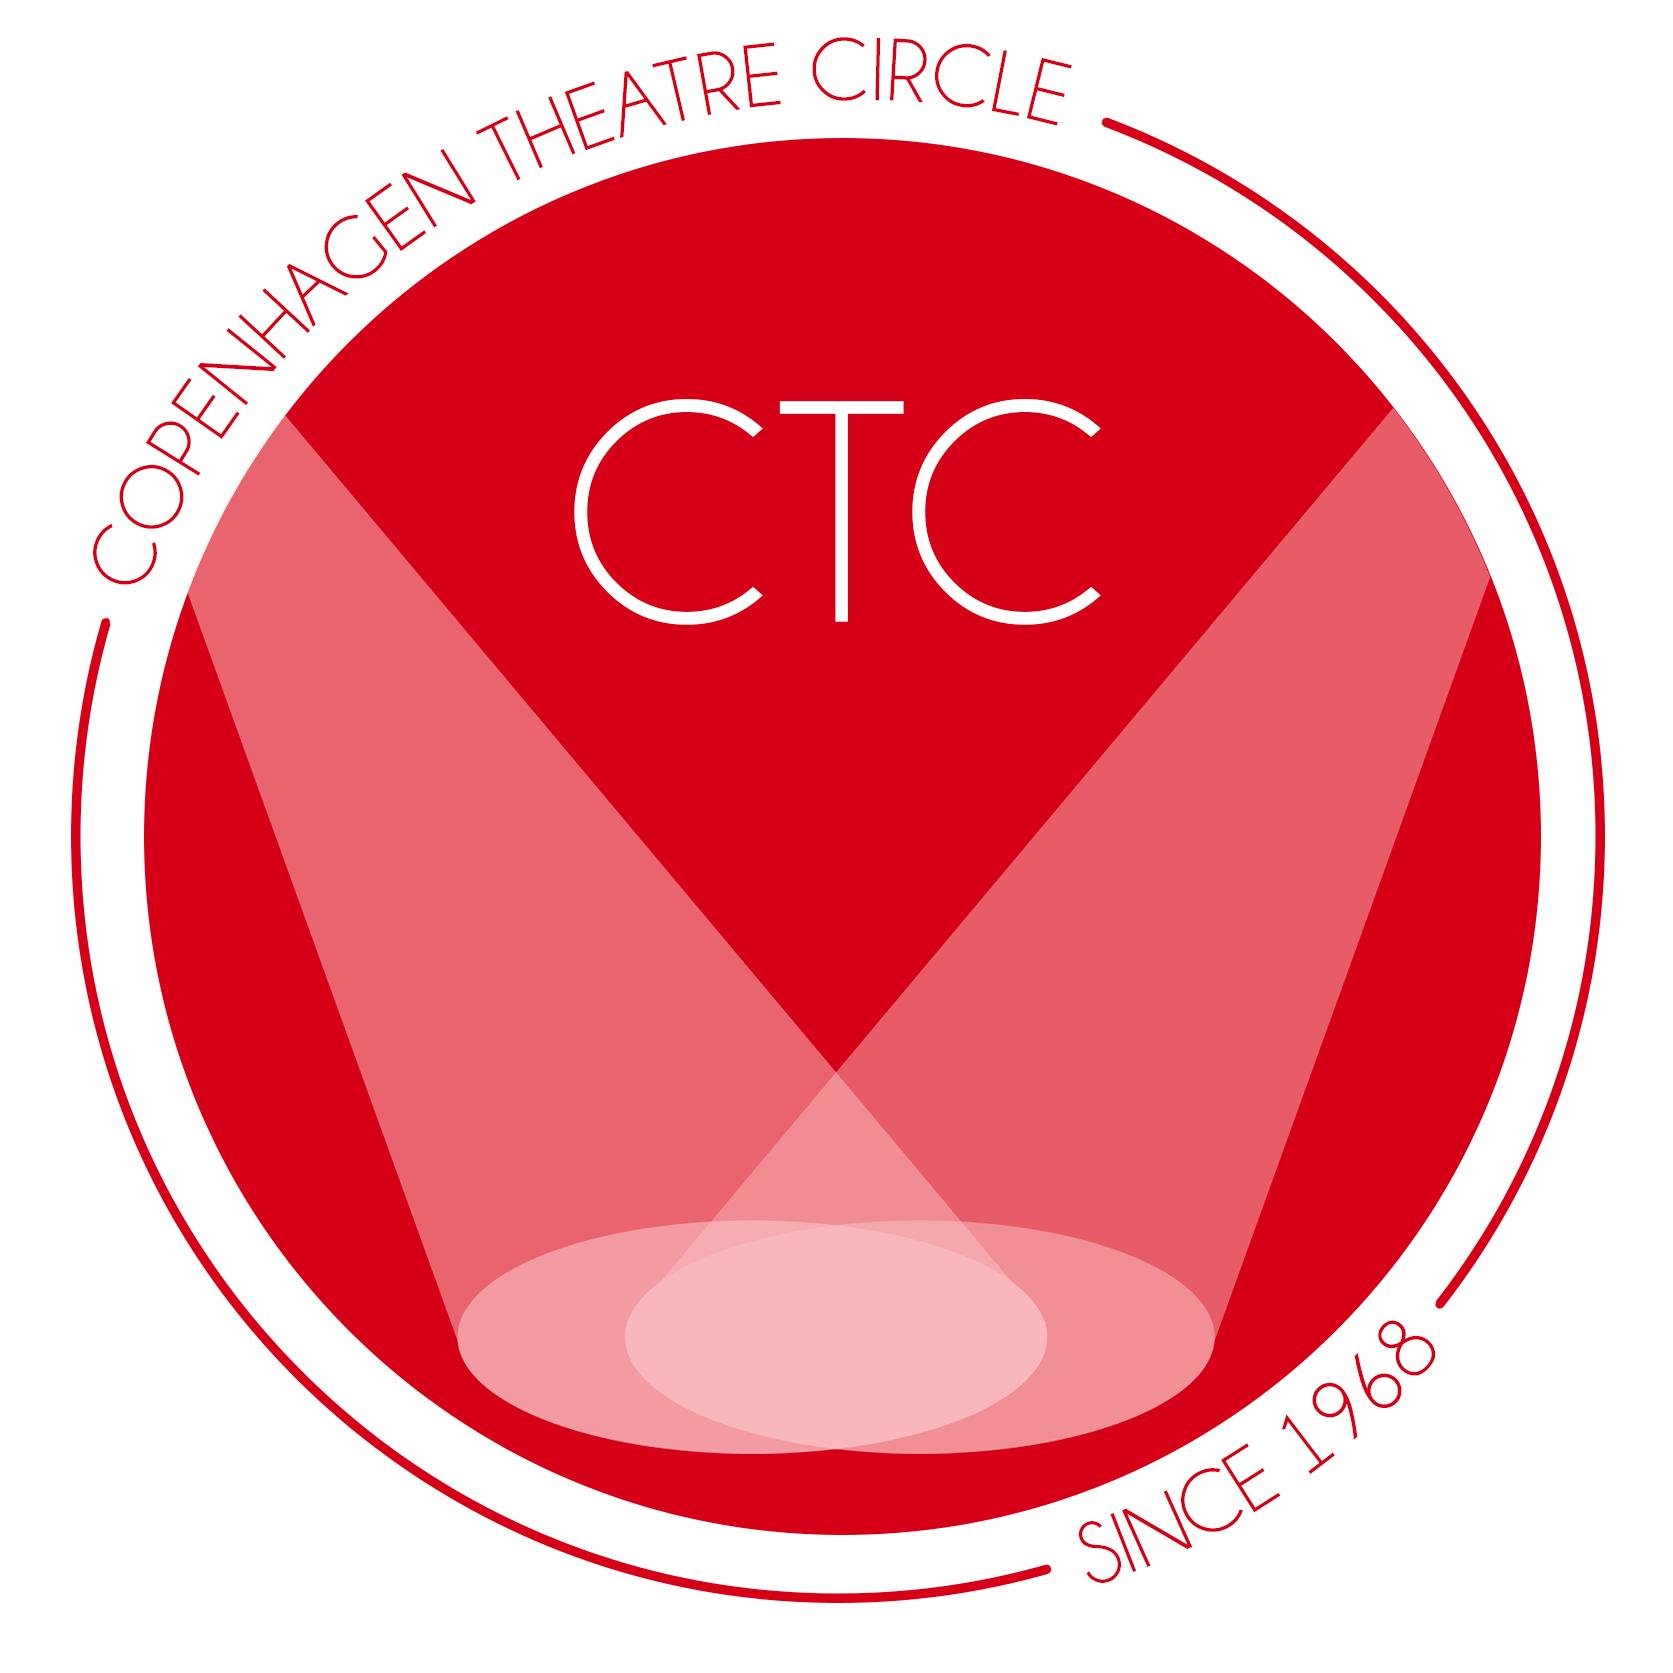 Cph Theatre Circle - Copenhagen Theatre Circle (1728x1728), Png Download